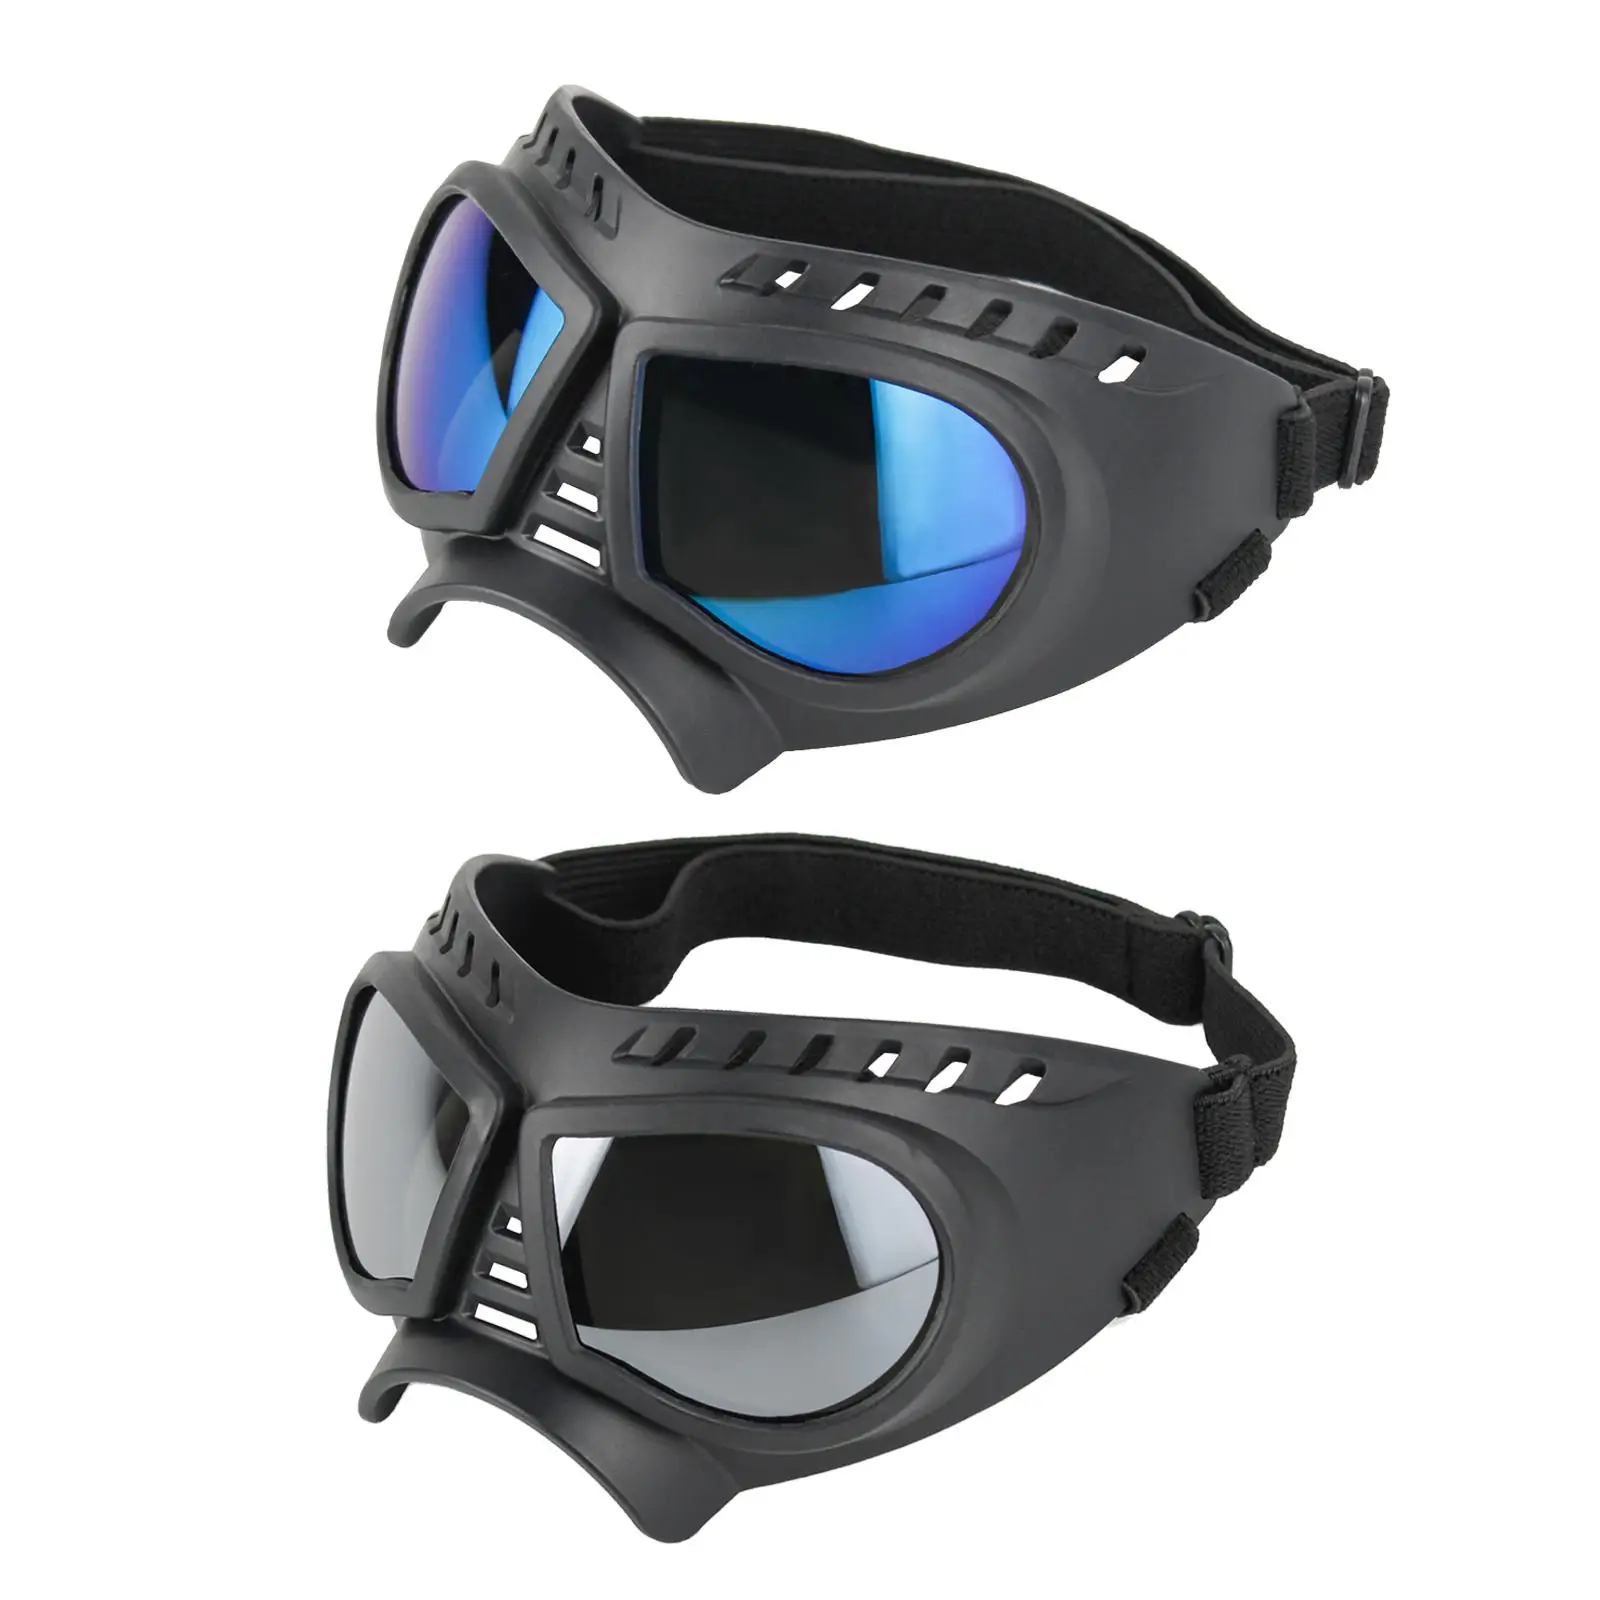 Dog Goggles Adjustable Sunglasses Costume Anti-Fog Portable Eye Wear Eye Protection for Outdoor Medium Small Dog Skiing Travel